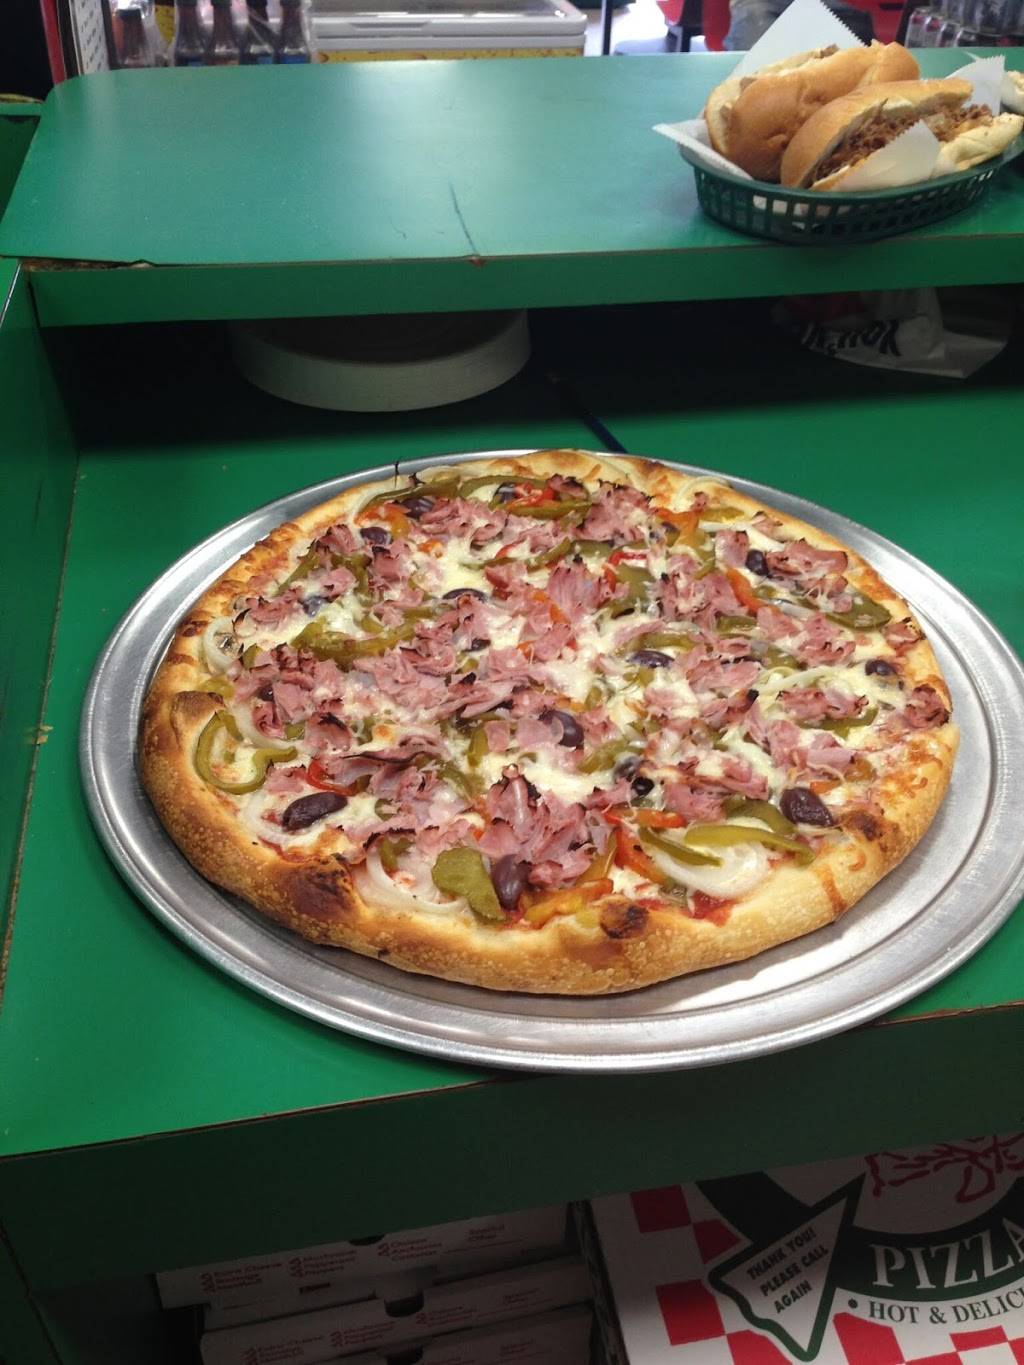 Alfredos Pizza | meal delivery | 4 Kedron Ave, Morton, PA 19070, USA | 6105431800 OR +1 610-543-1800